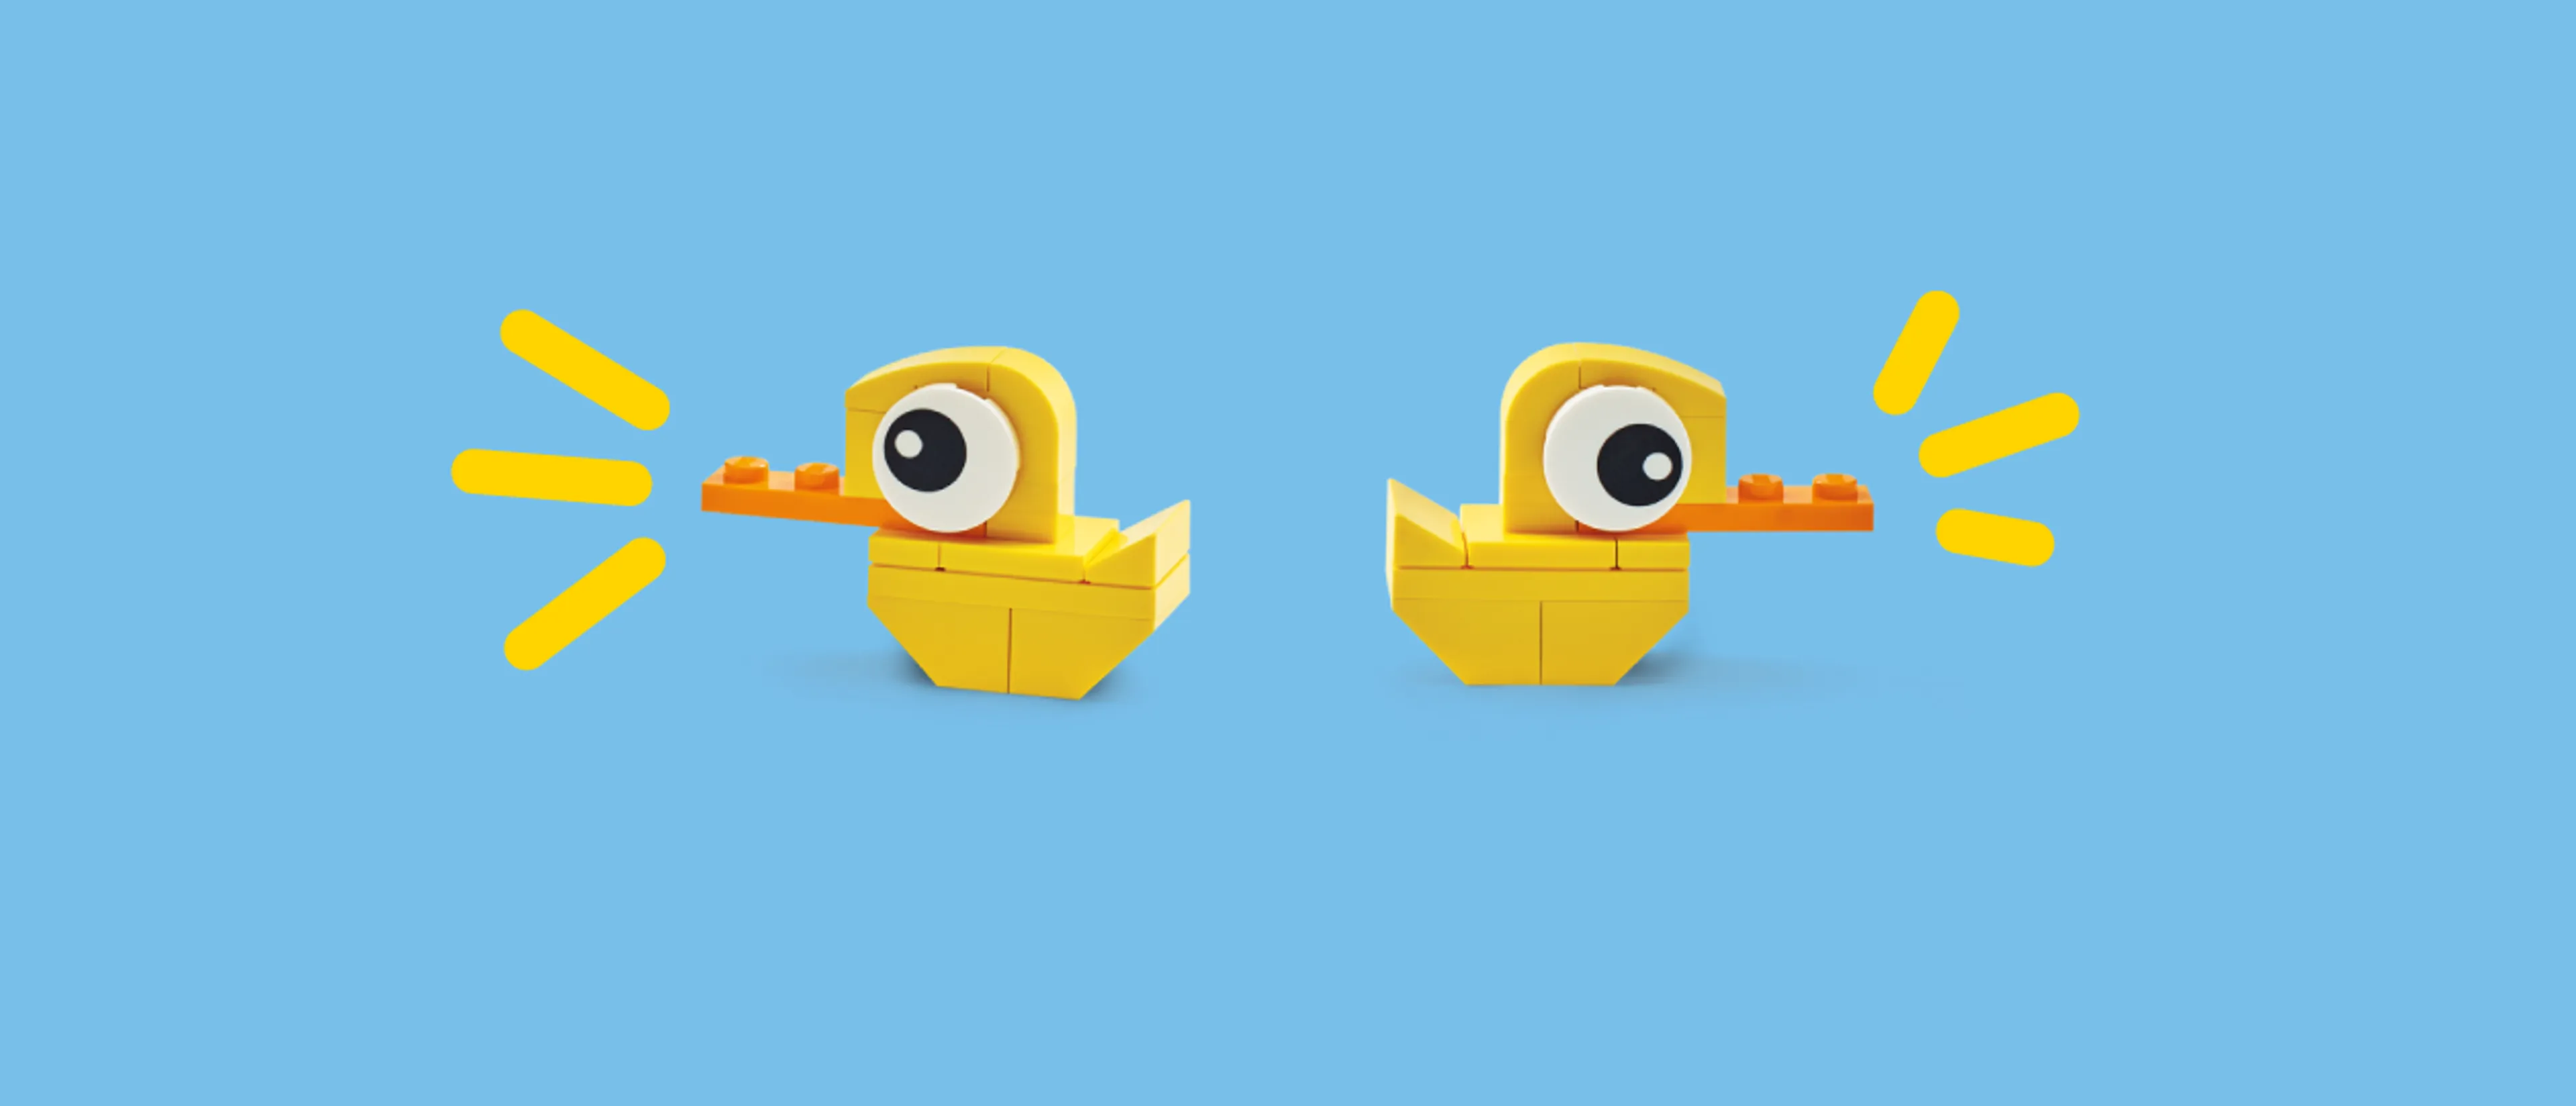 Two LEGO ducks